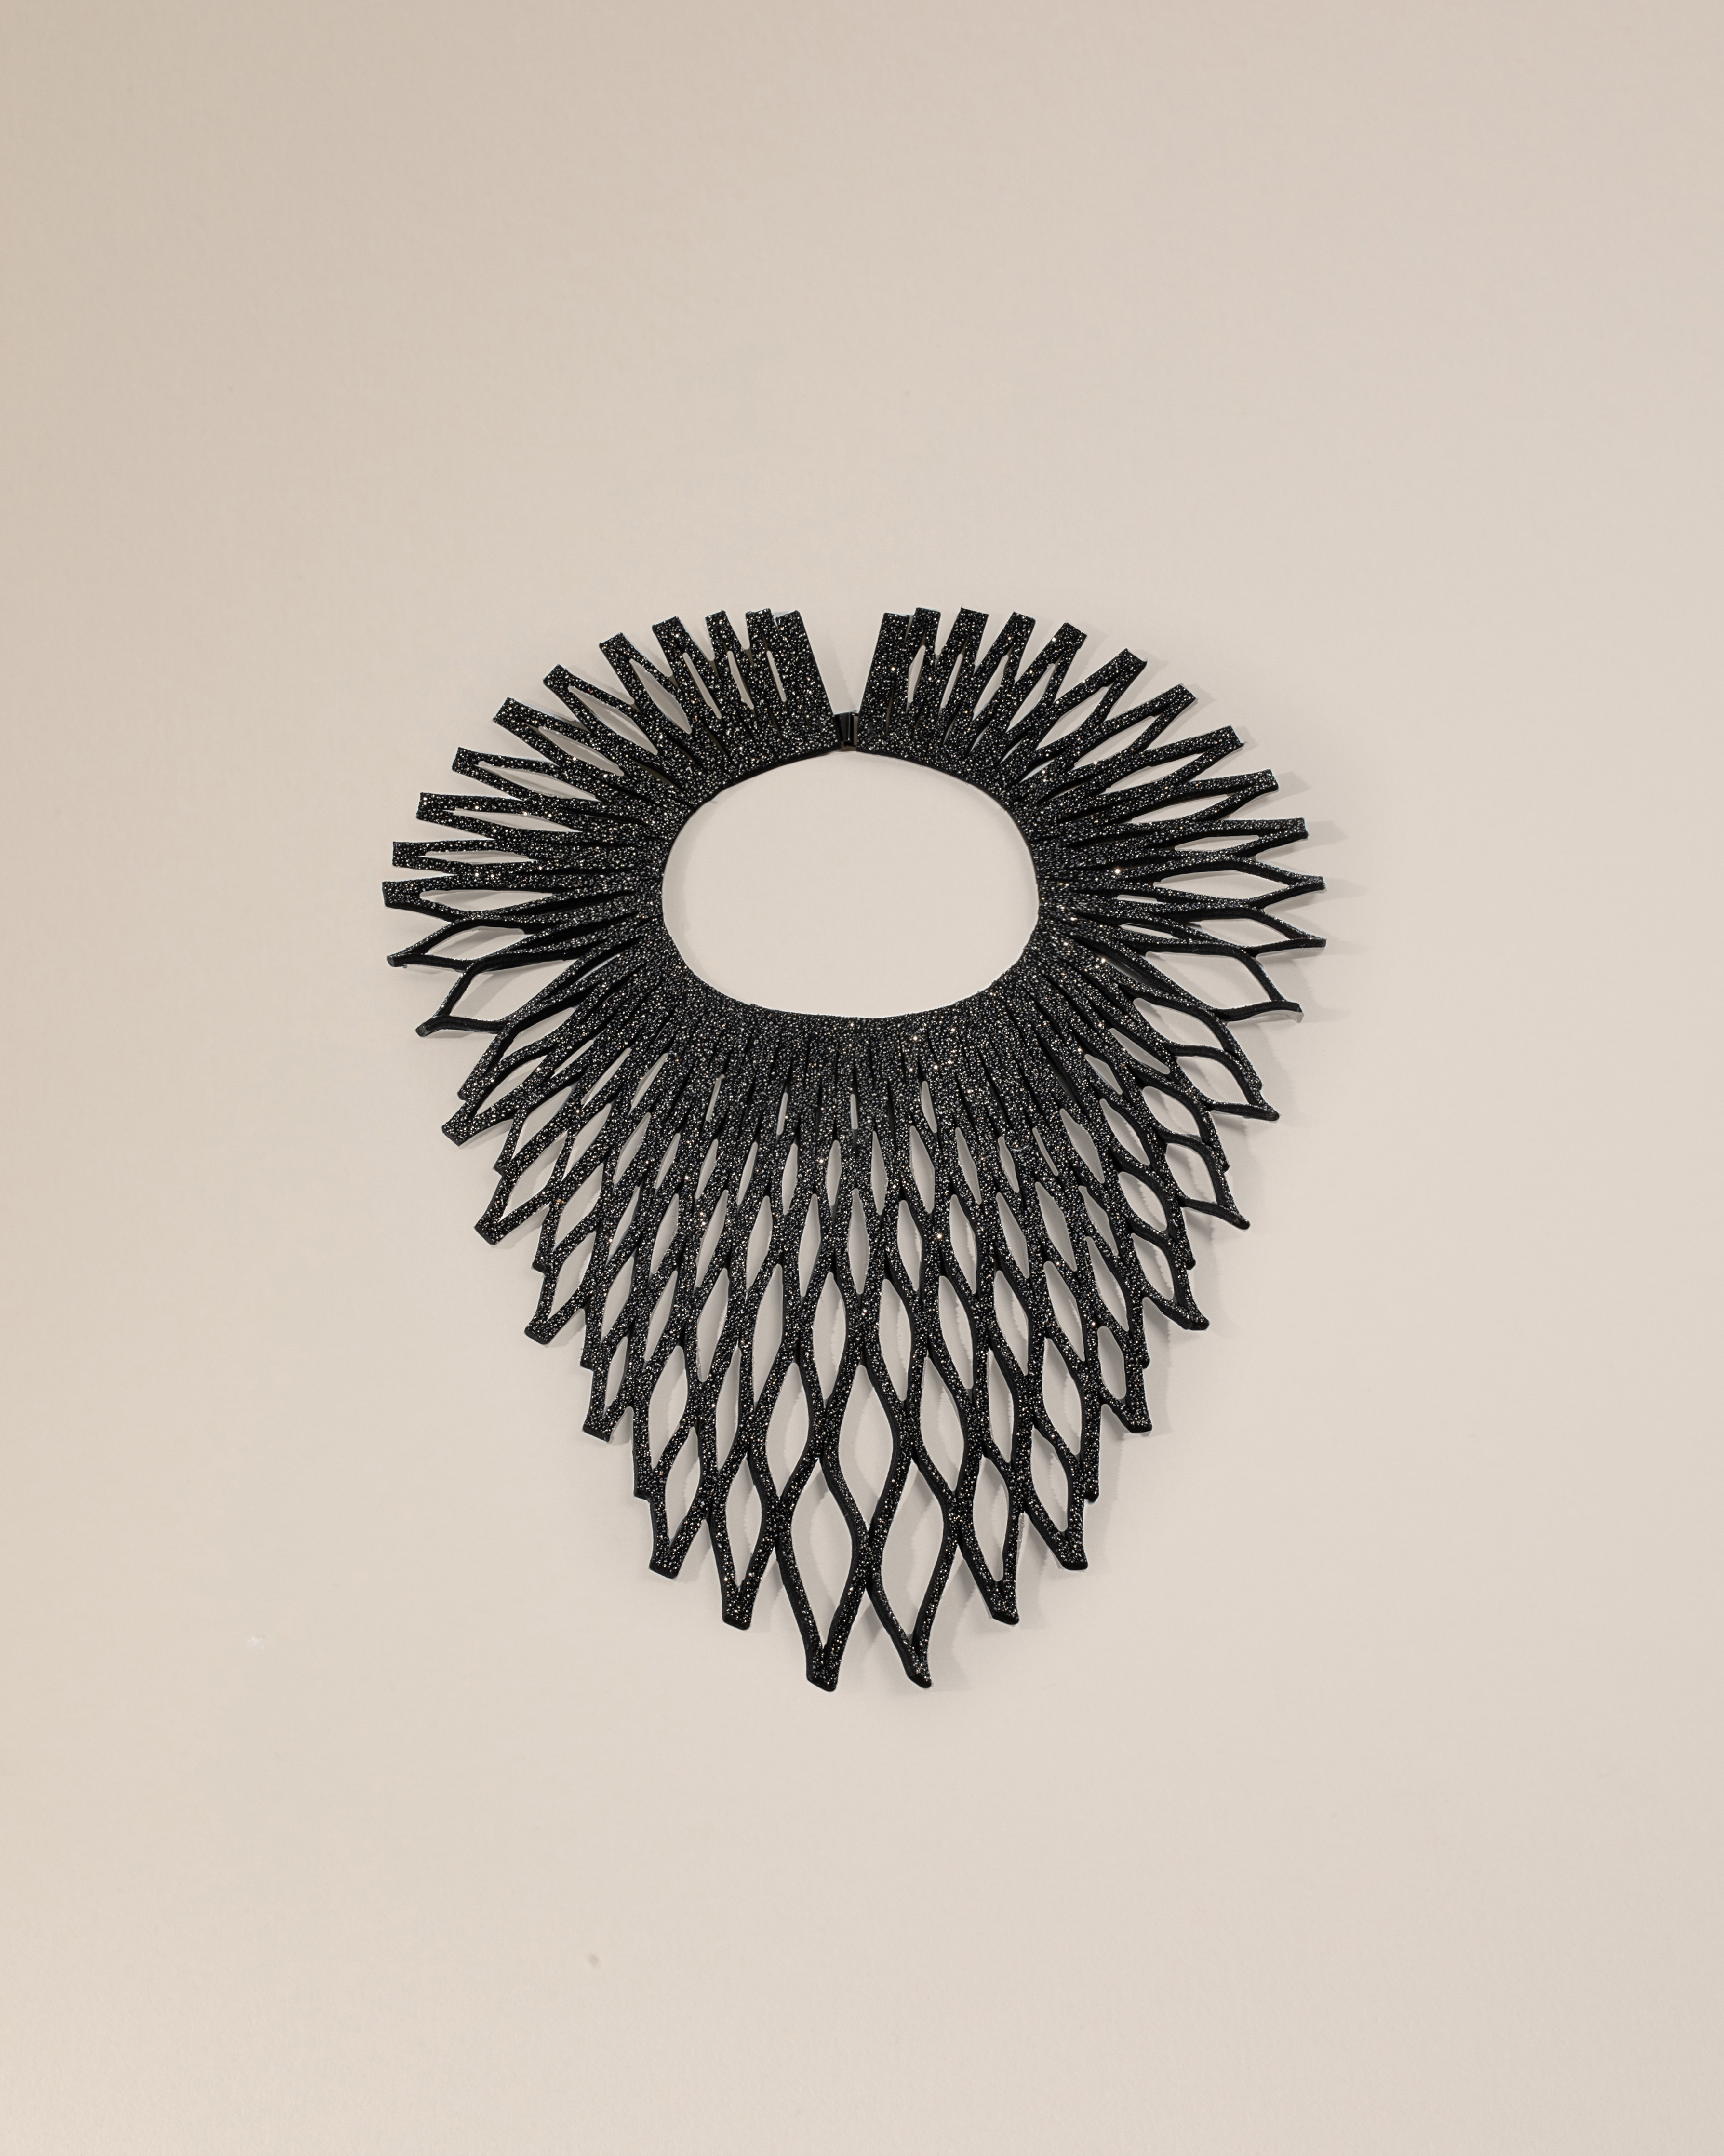 Luminous Necklace in Black Crystallised Leather. Image Courtesy of So-Le Studio